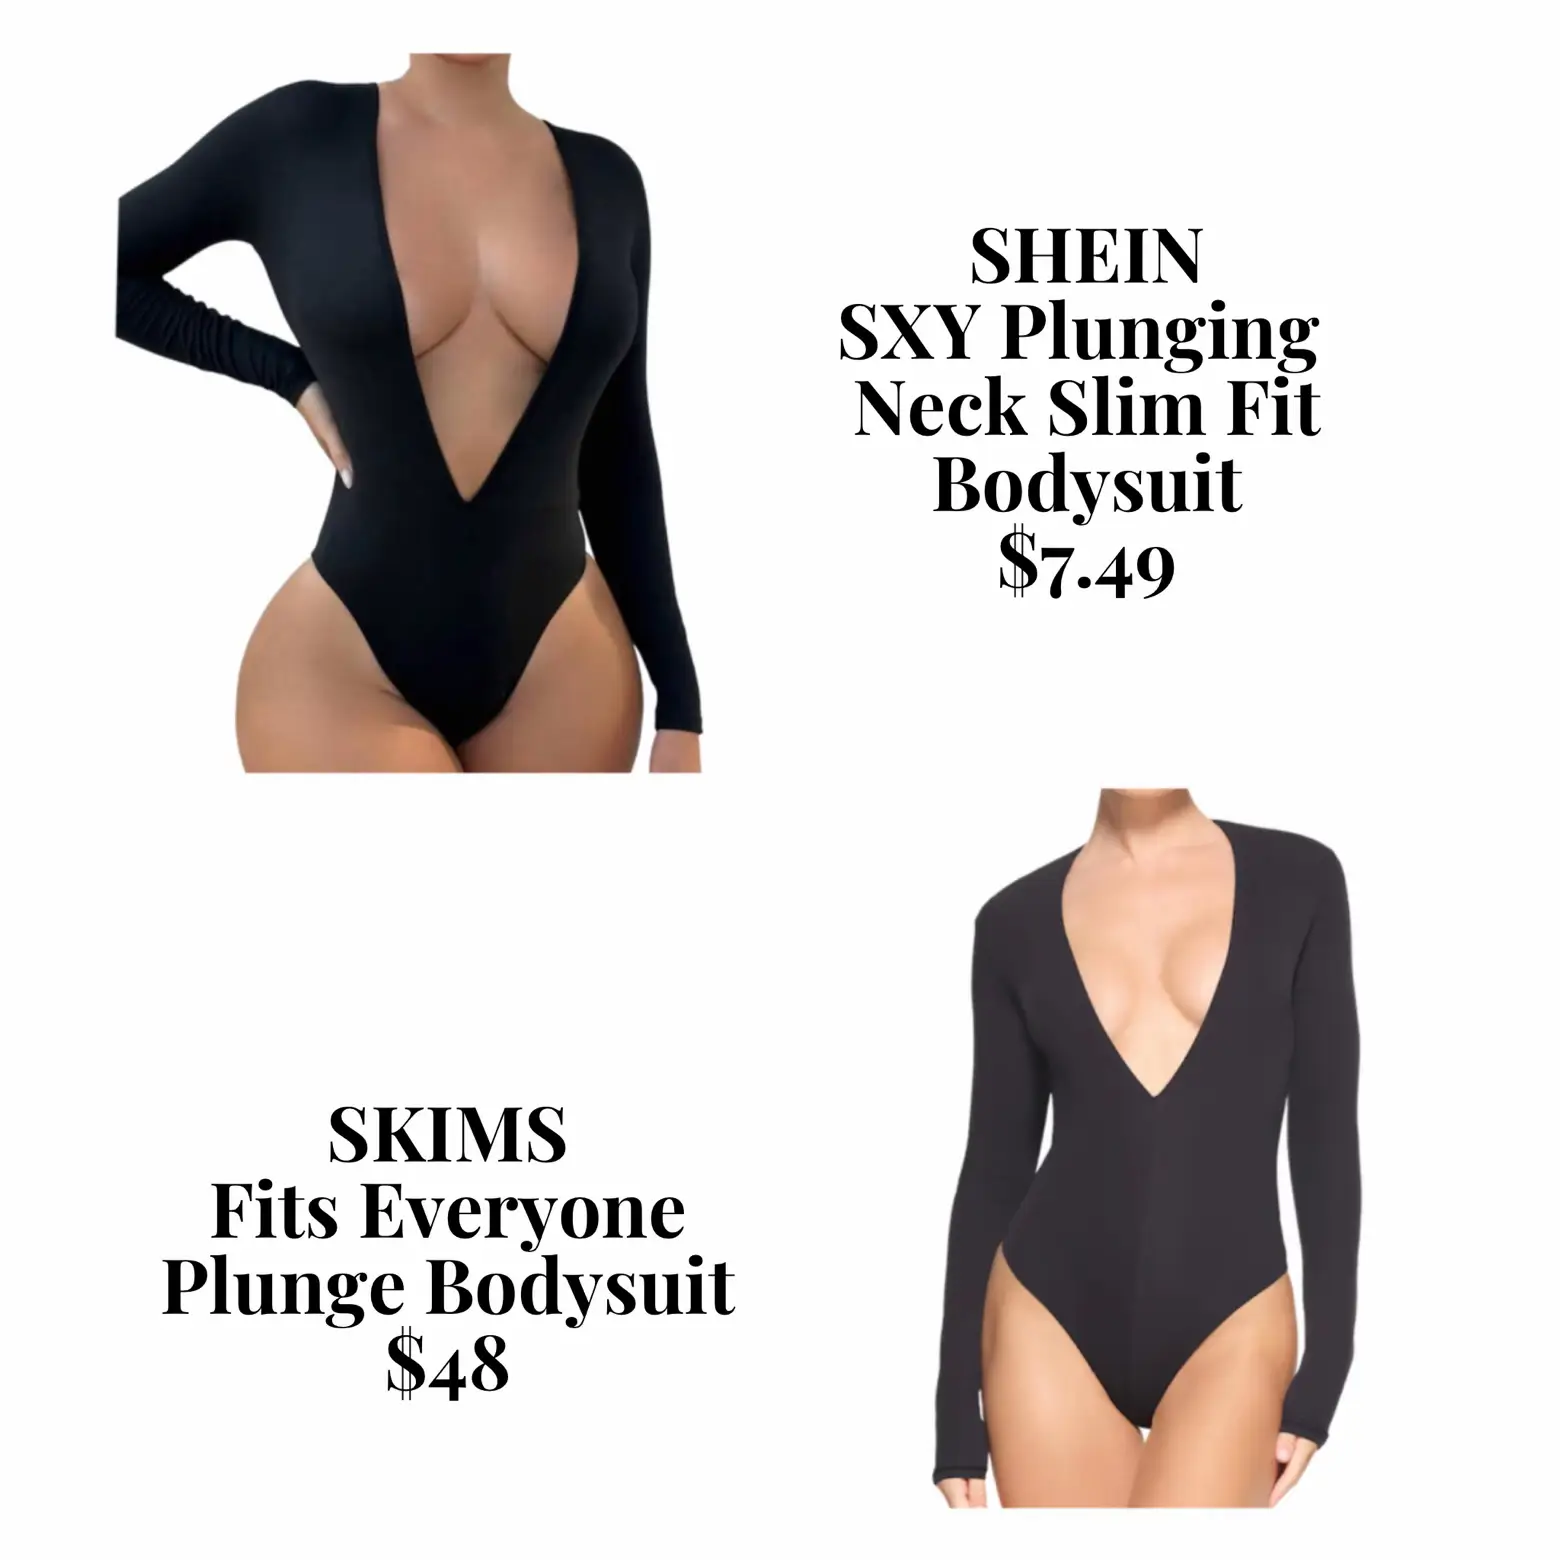 SHEIN SXY Square Neck Slim Fit Bodysuit